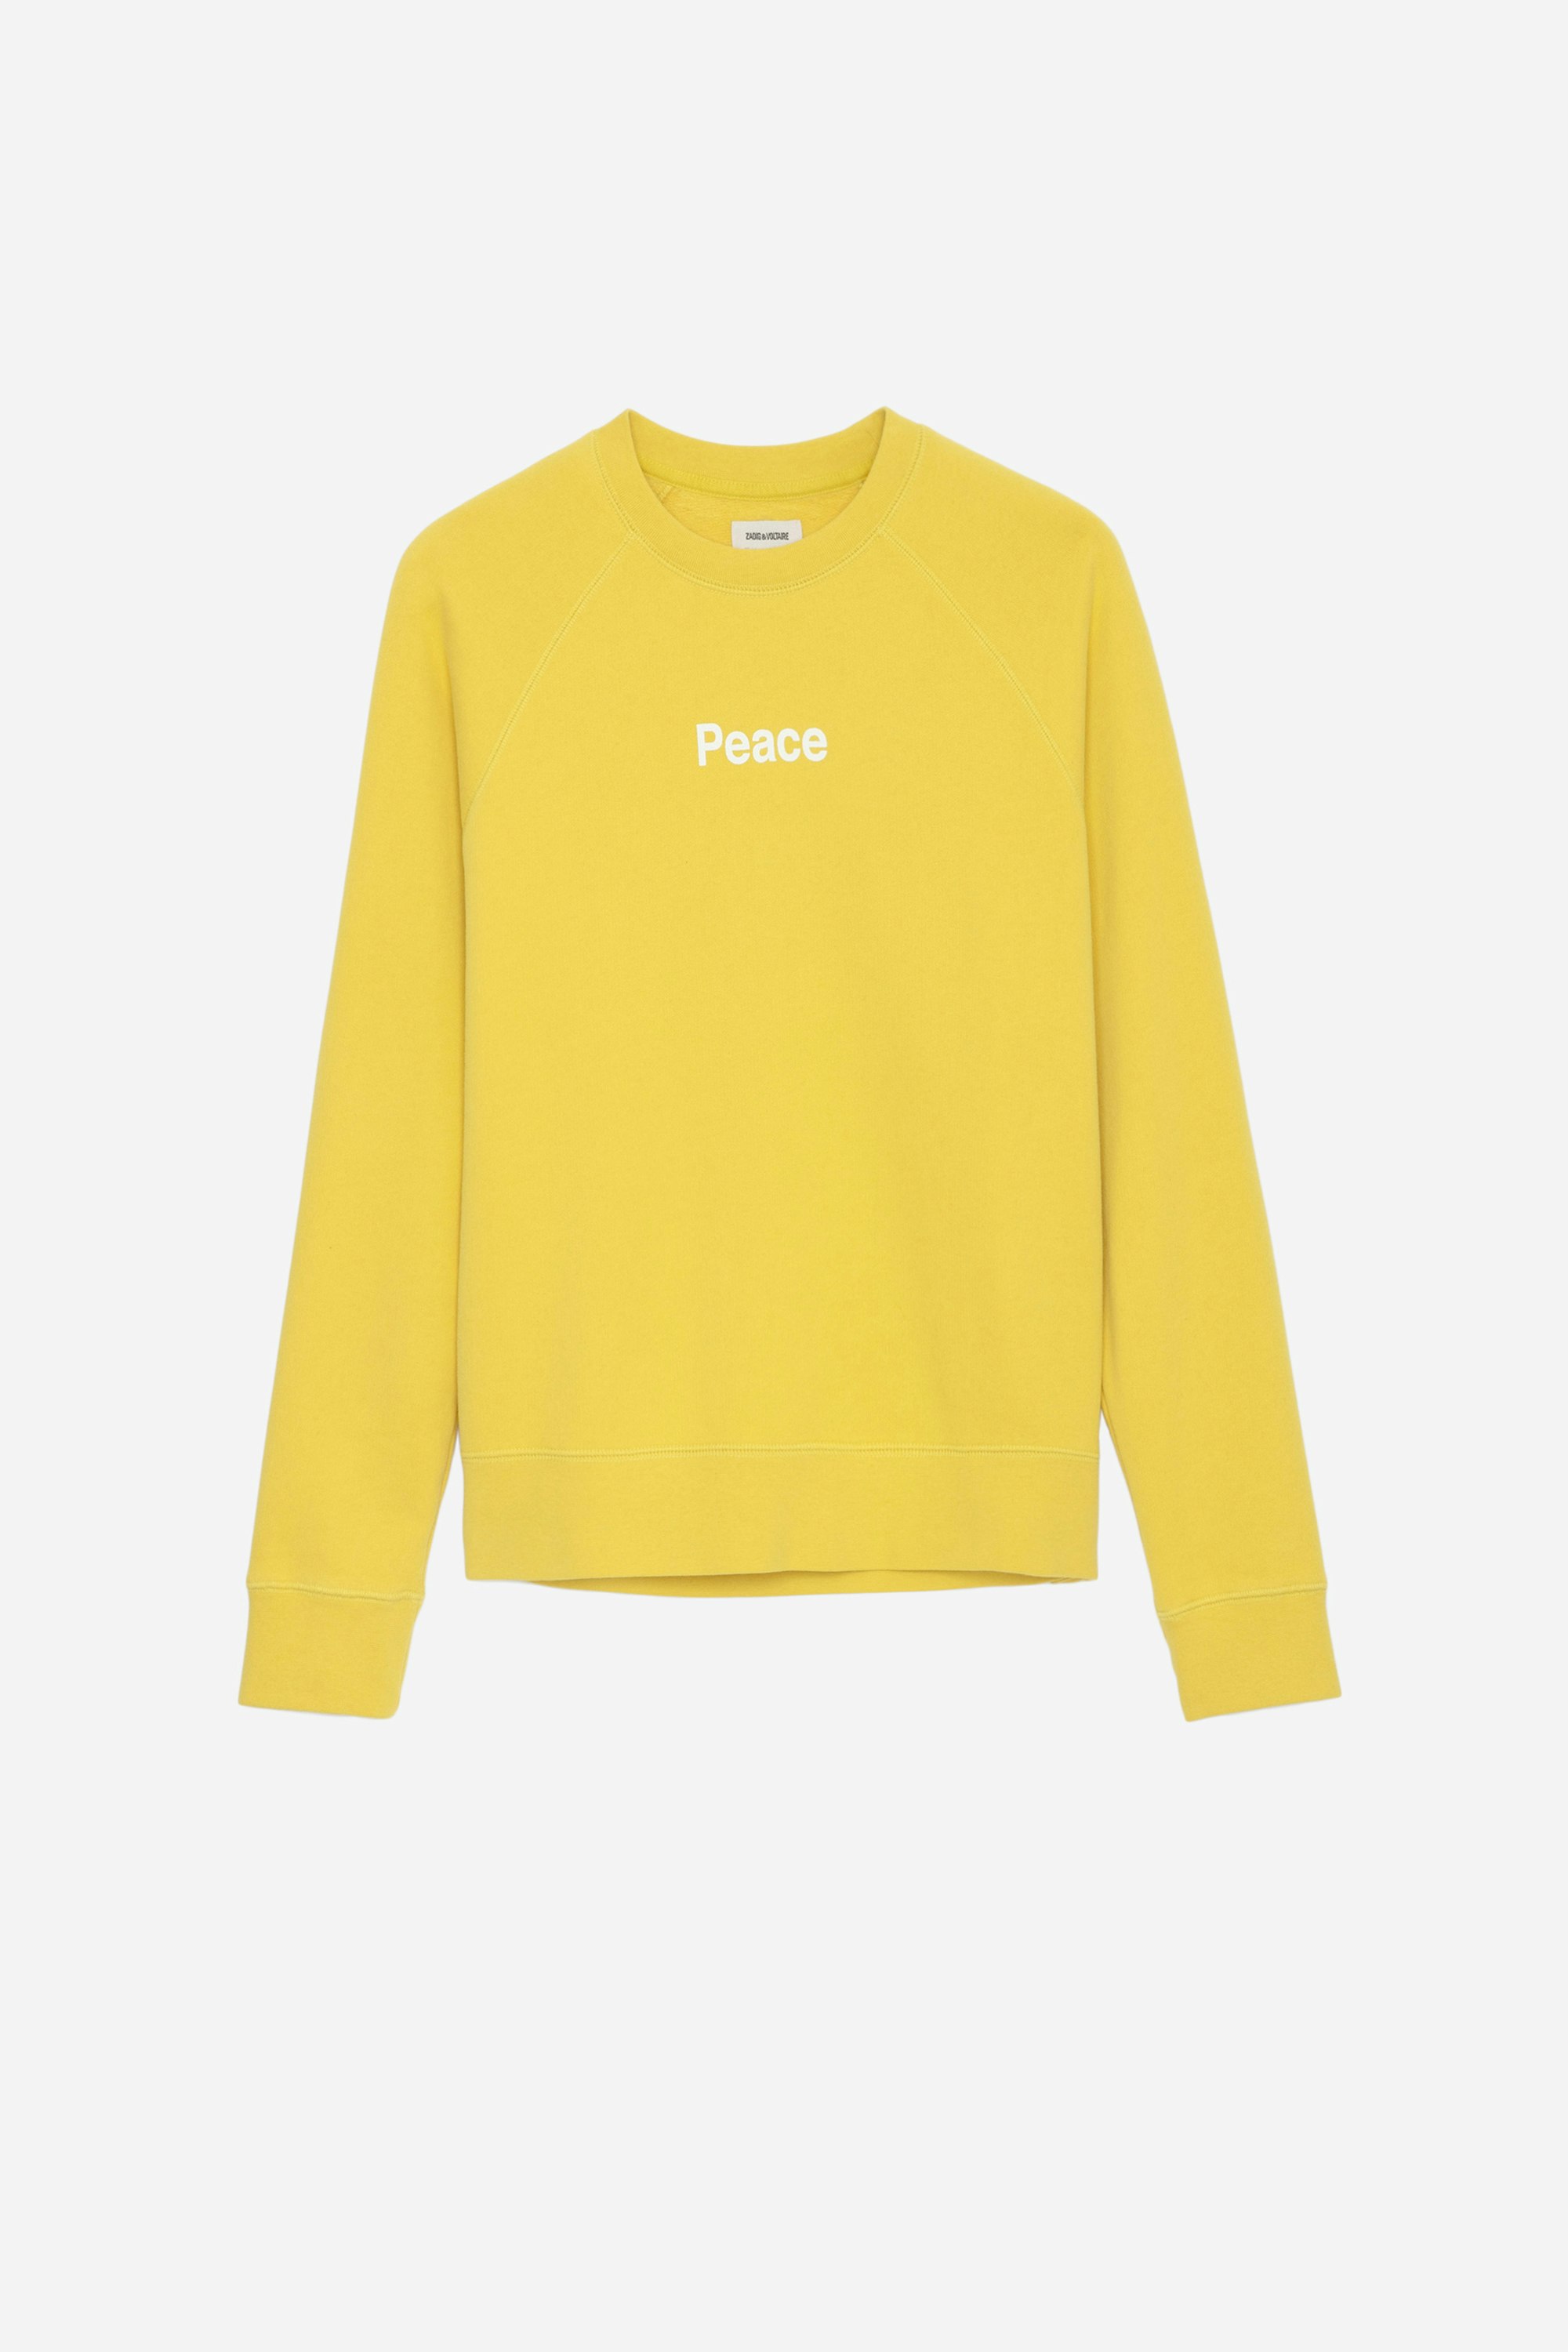 Upper Peace Sweatshirt - Women's yellow sweatshirt with "Peace" logo on front